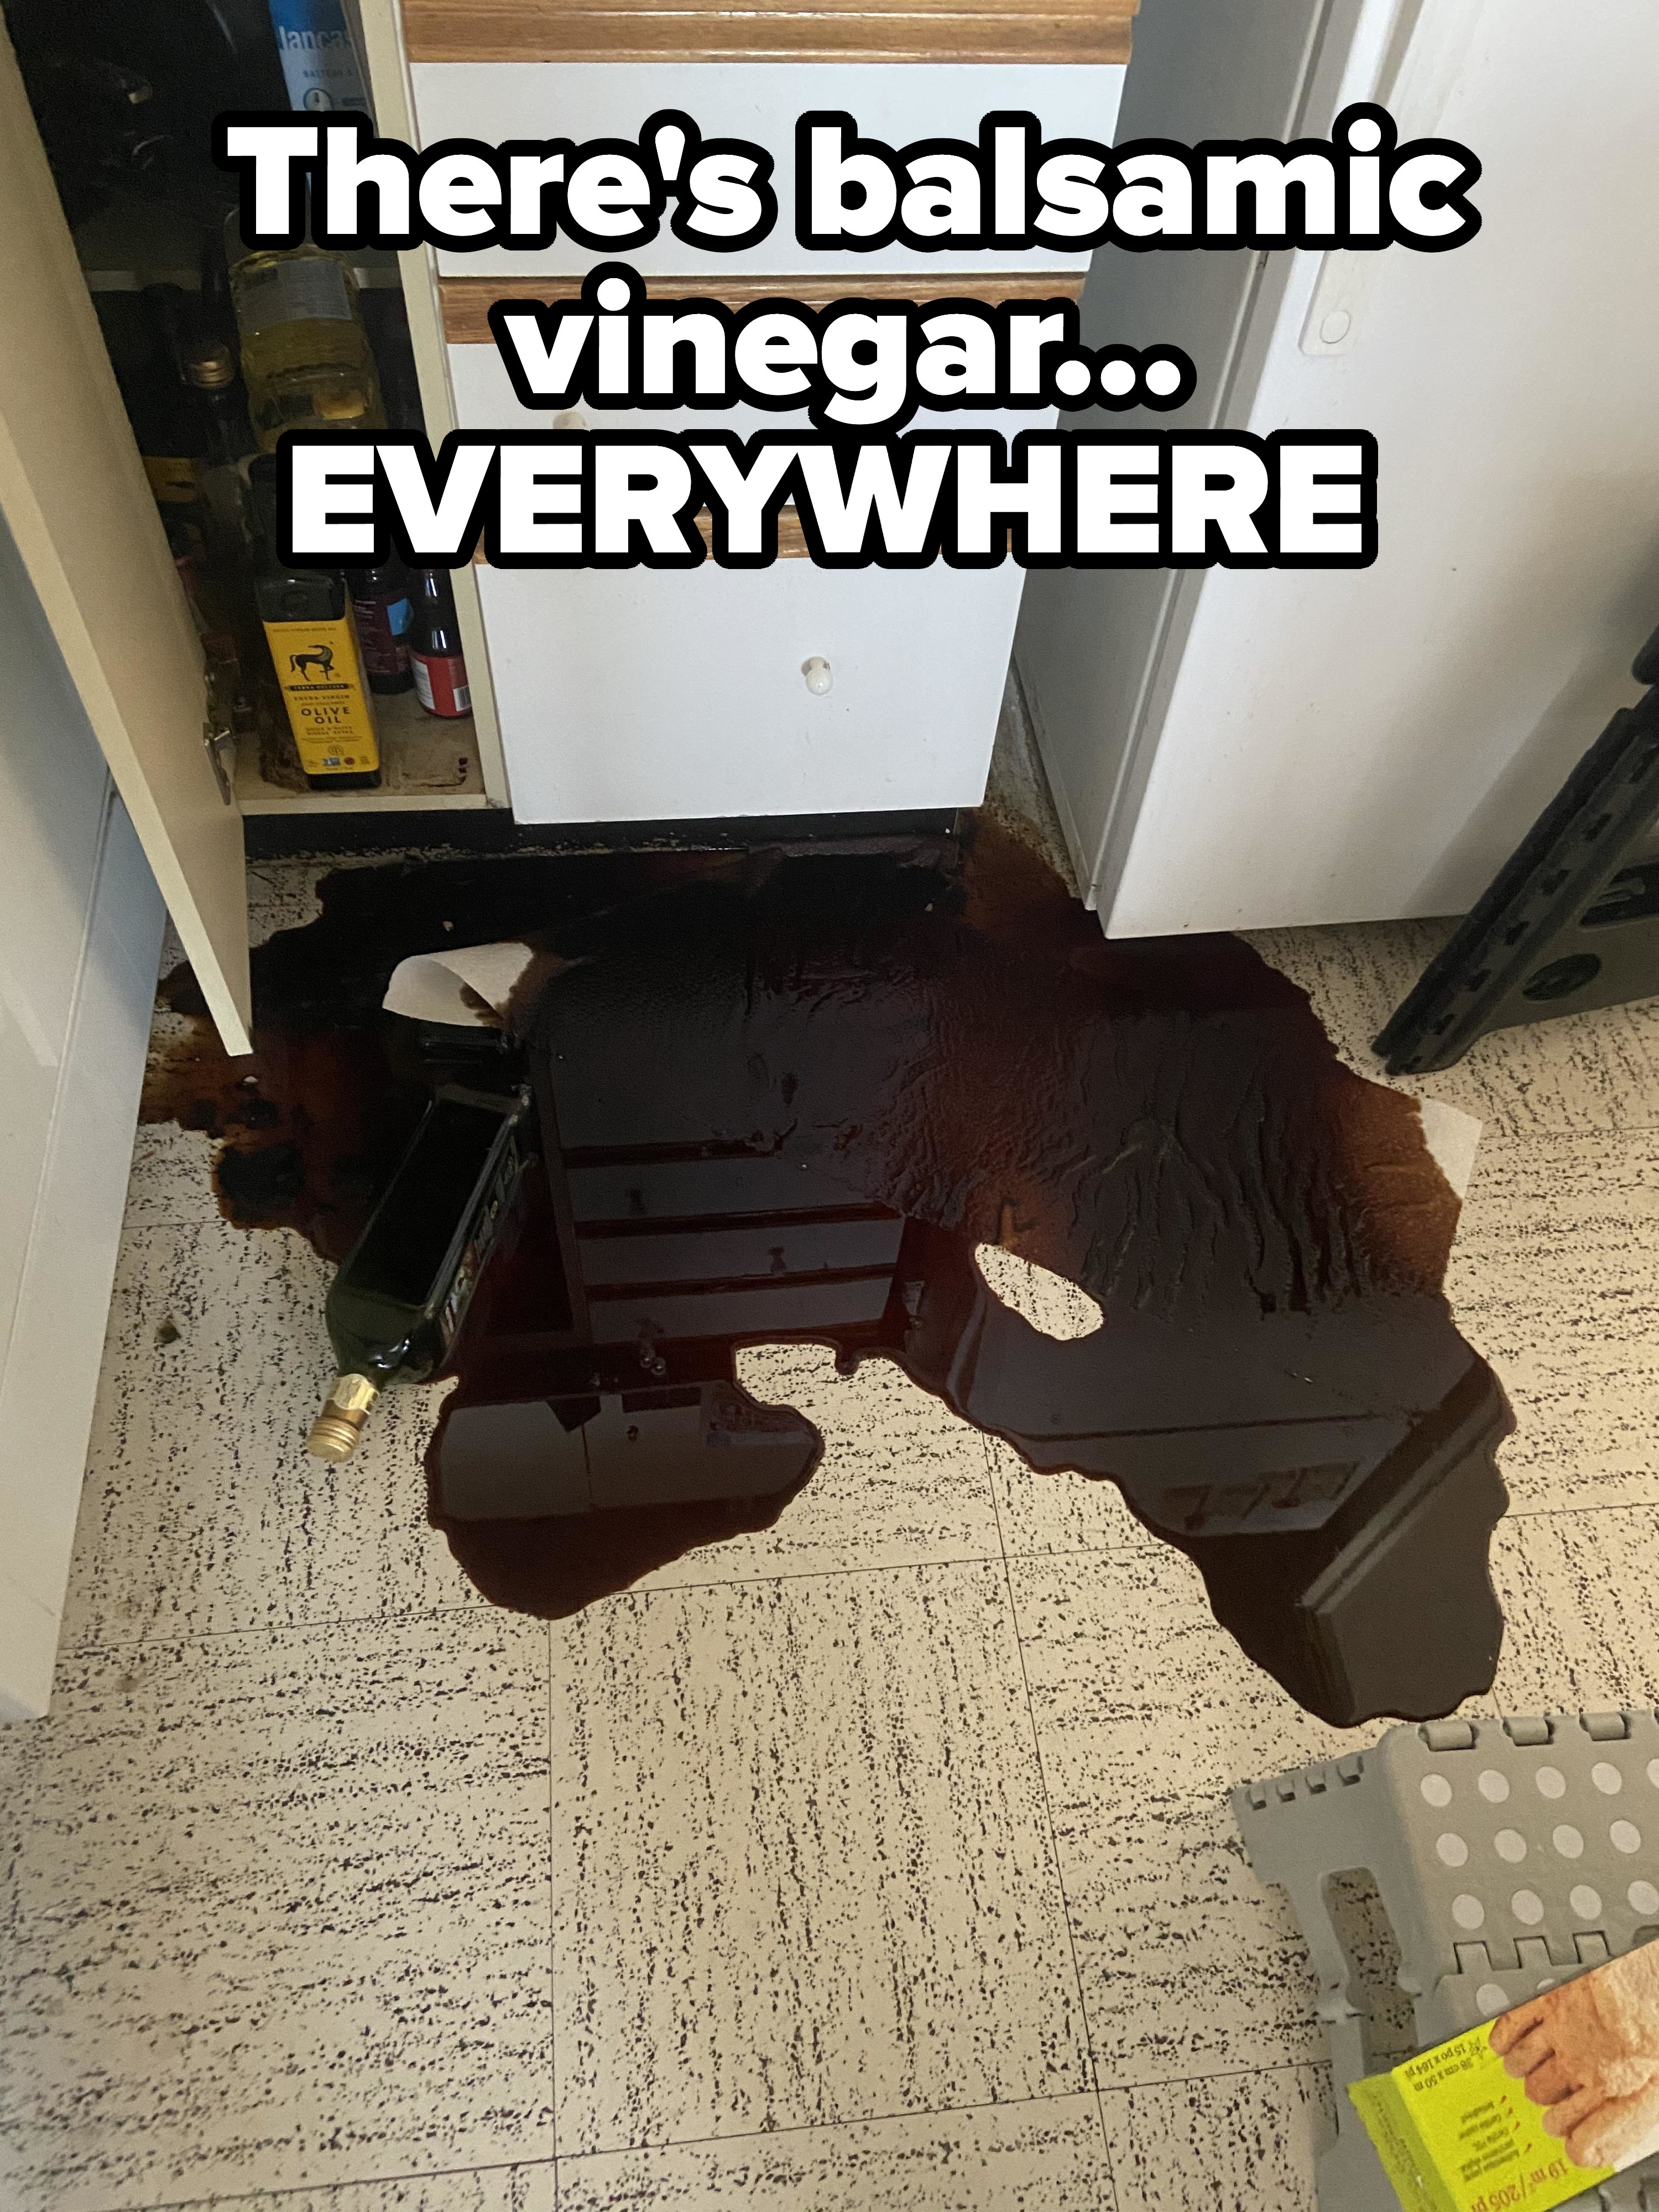 Liquid spilled on the floor